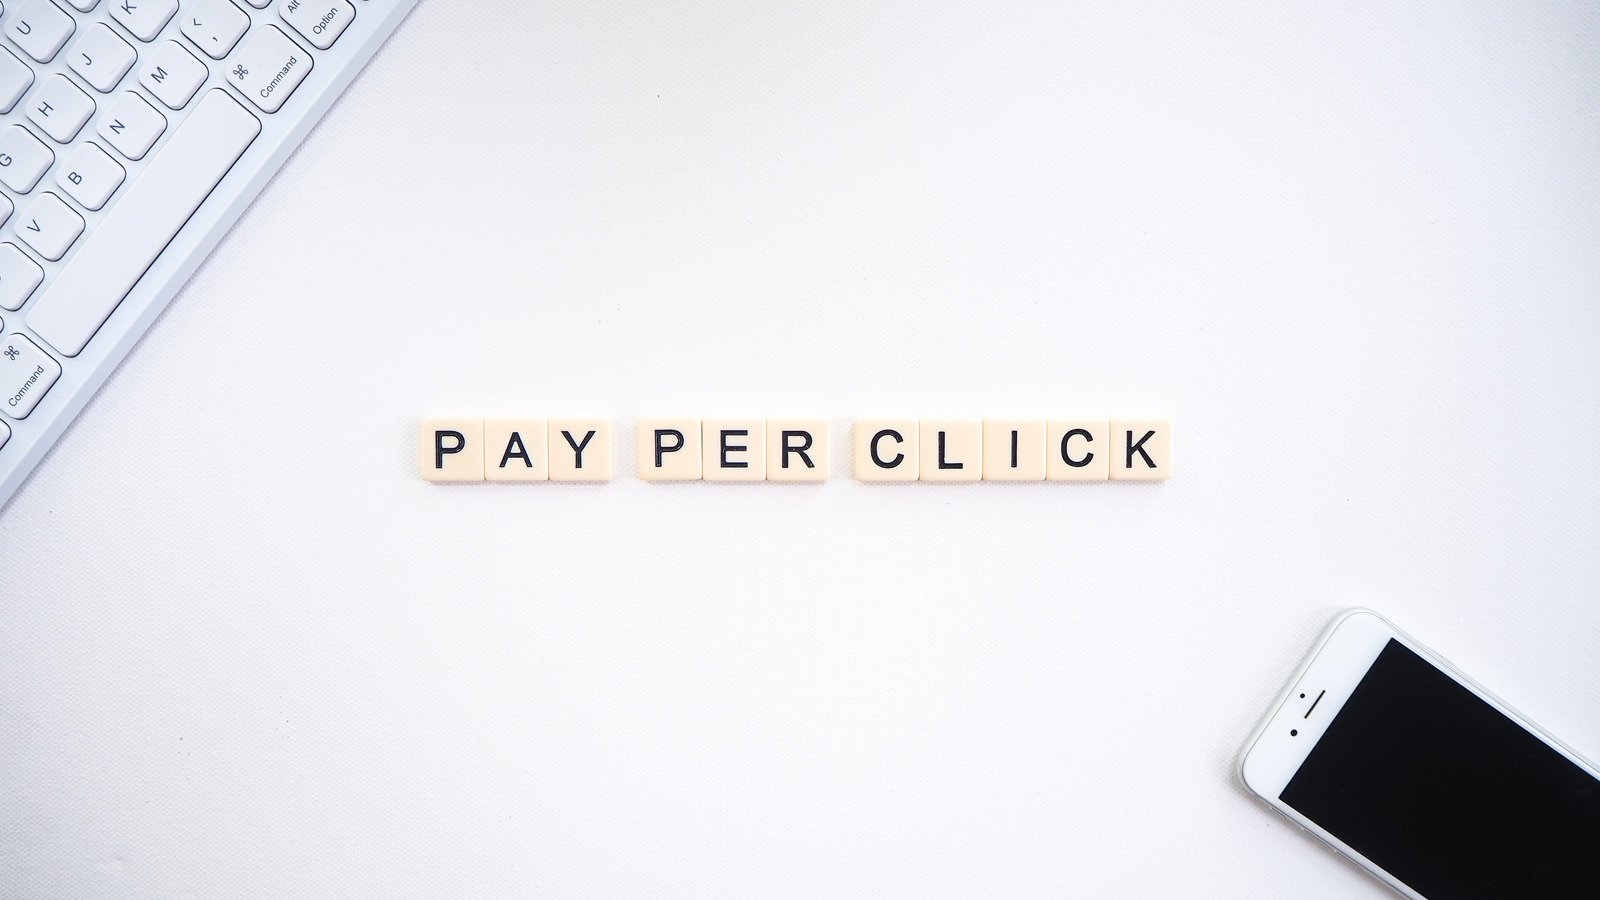 Pay per click PPC management